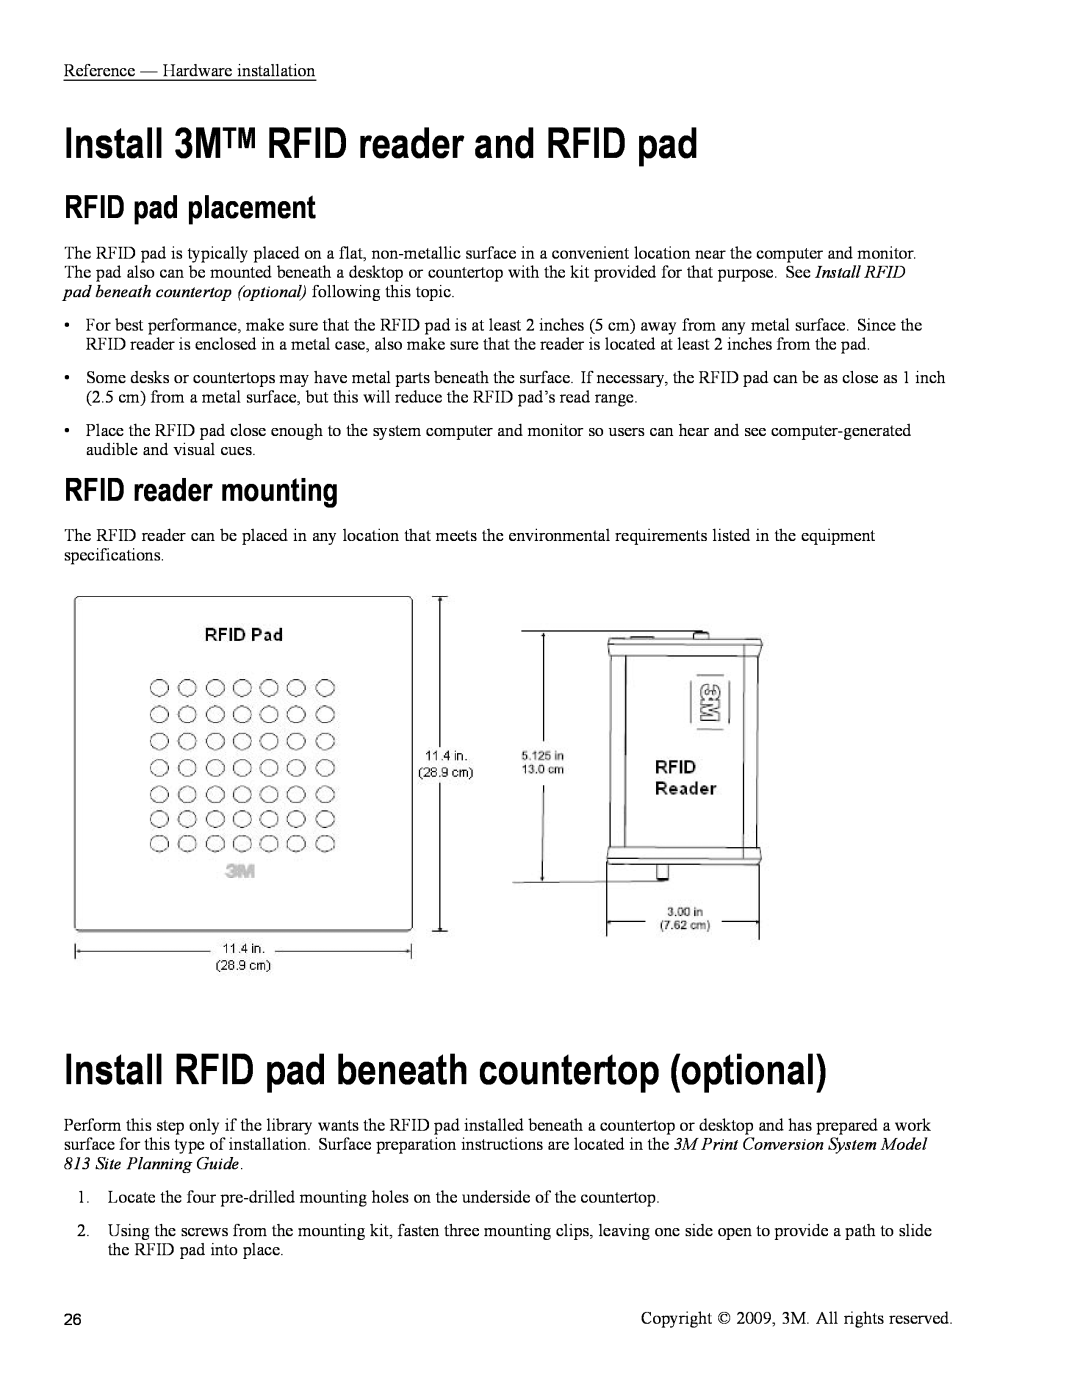 3M 813 owner manual Install 3MTM RFID reader and RFID pad, Install RFID pad beneath countertop optional, RFID pad placement 